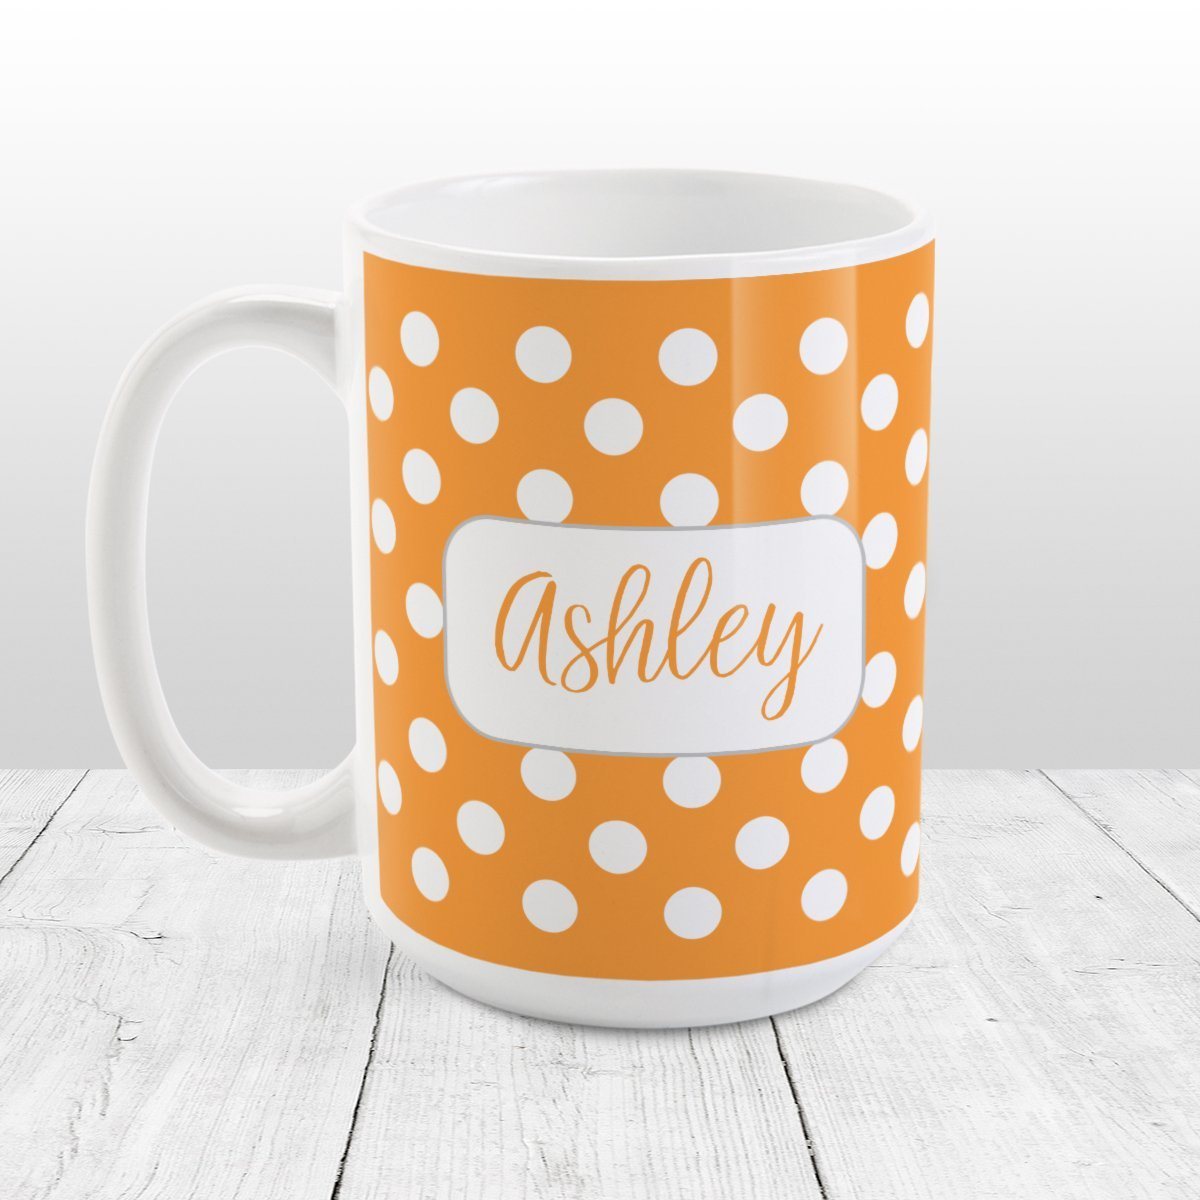 Personalized Orange Polka Dot Mug at Amy's Coffee Mugs